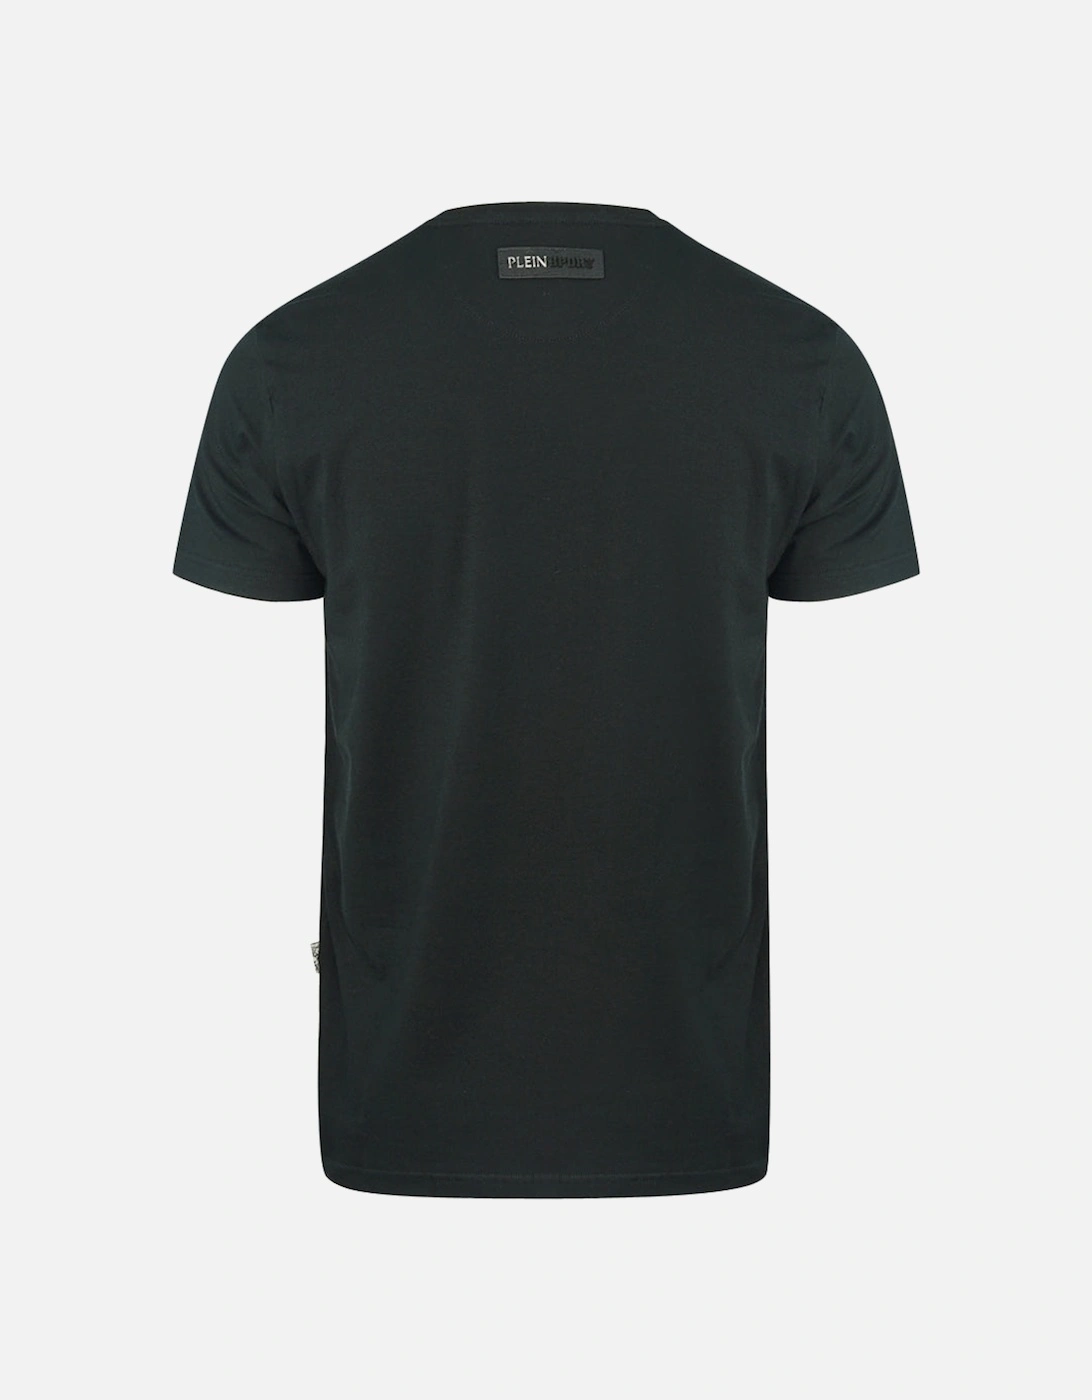 Plein Sport Chest Logo Black T-Shirt